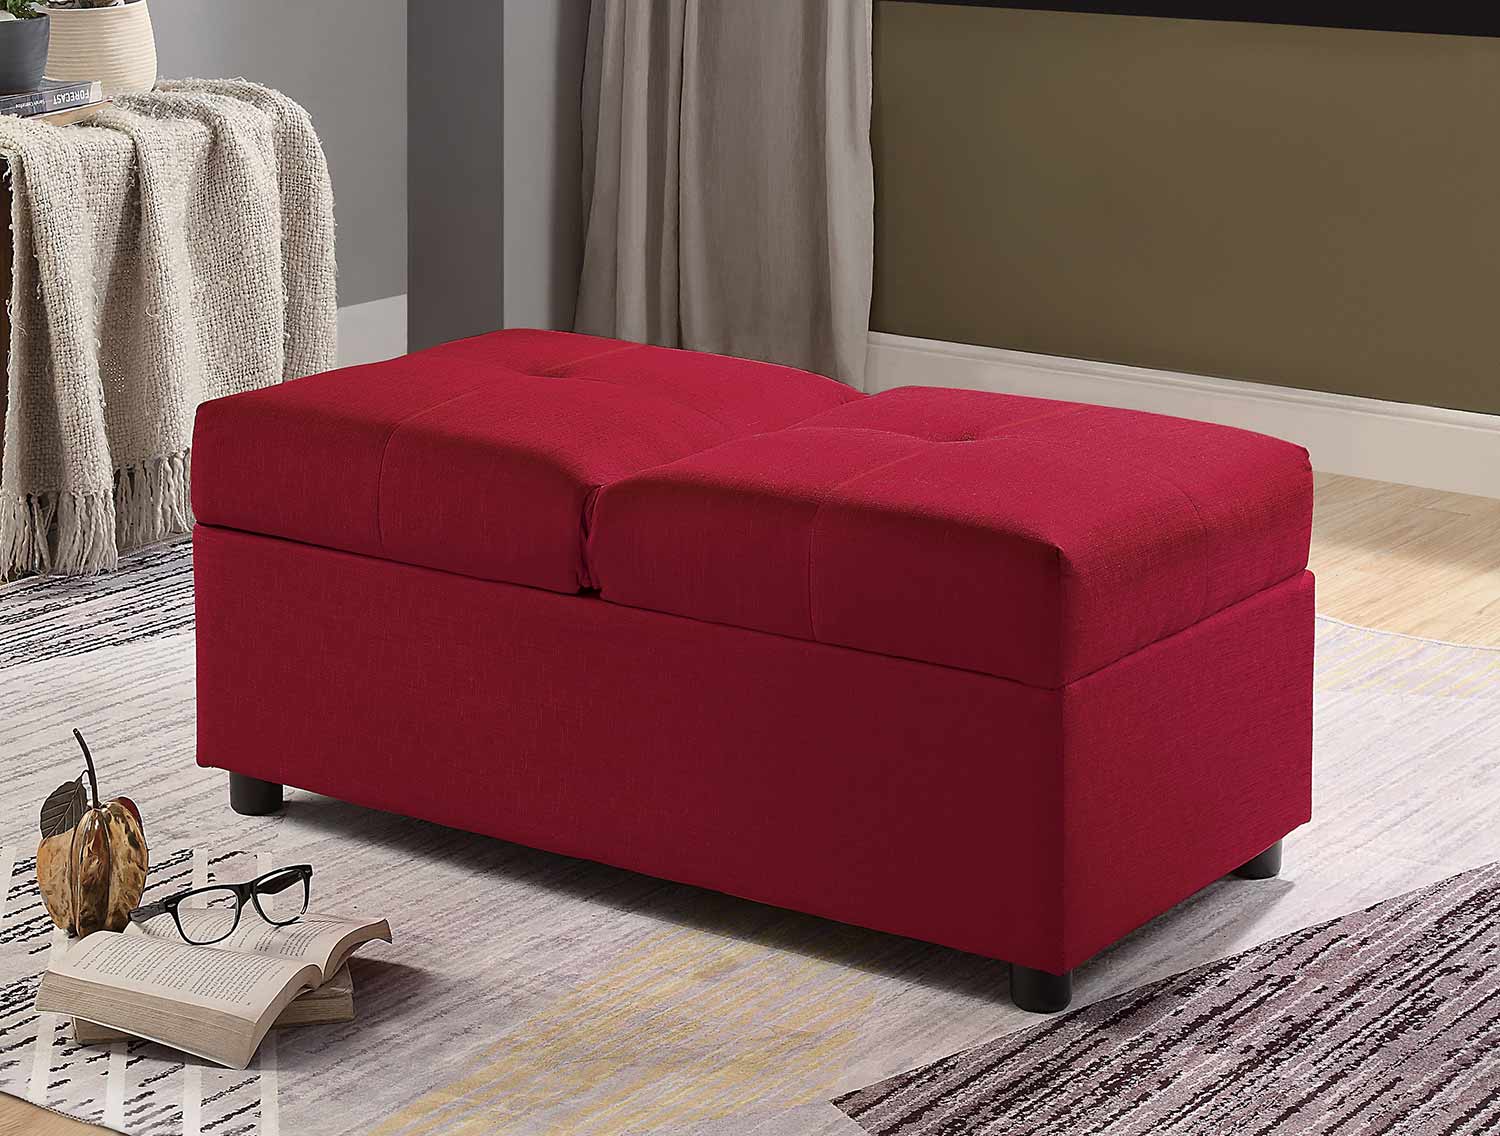 Homelegance Denby Storage Ottoman/Chair - Red